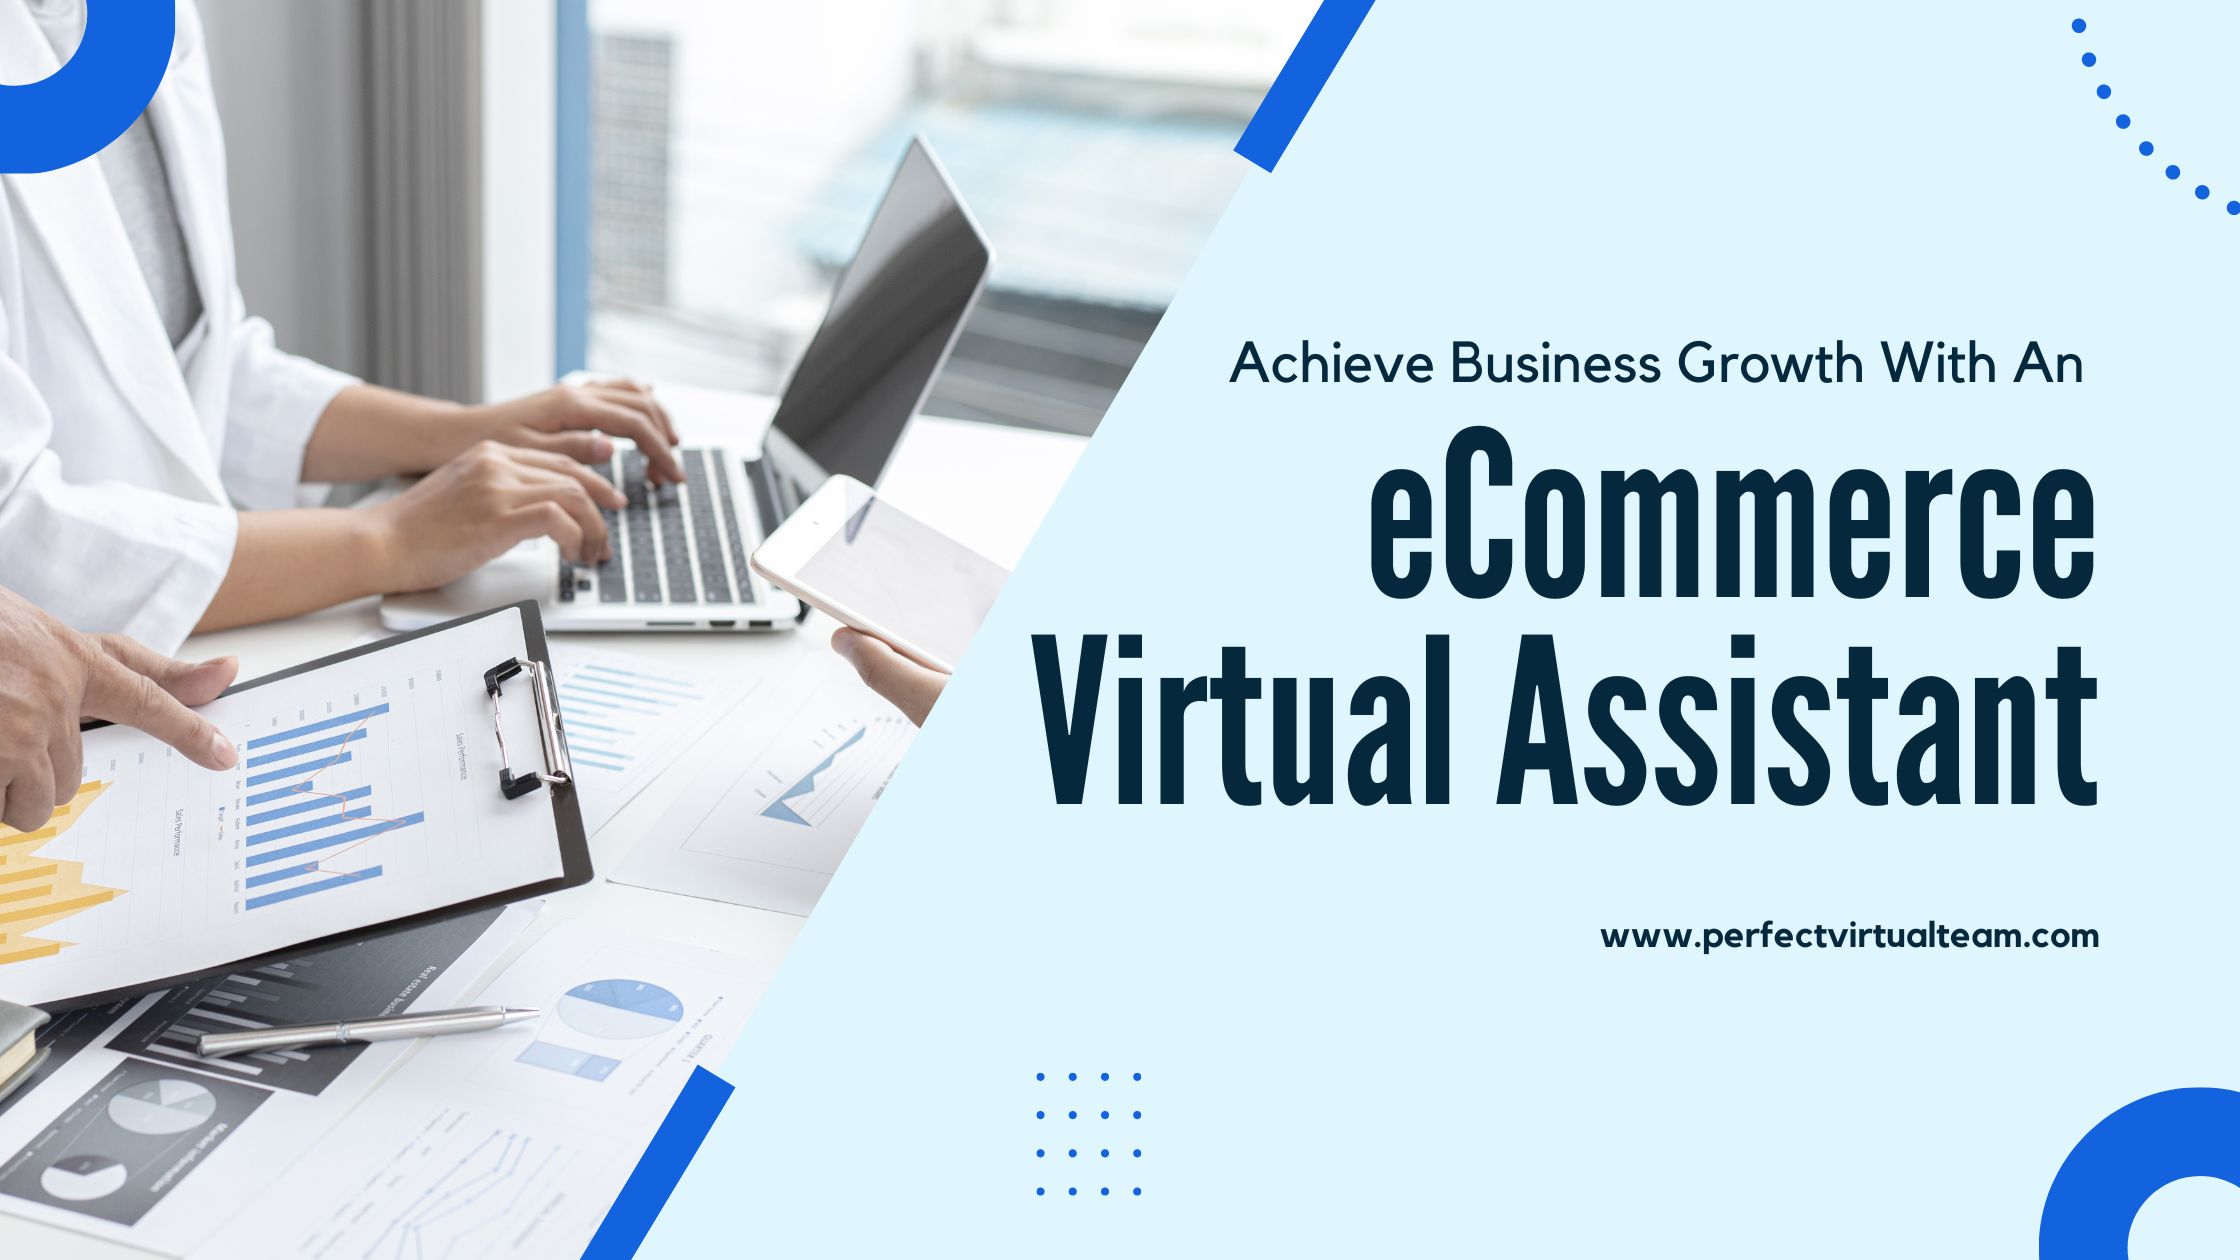 eCommerce virtual Assistant